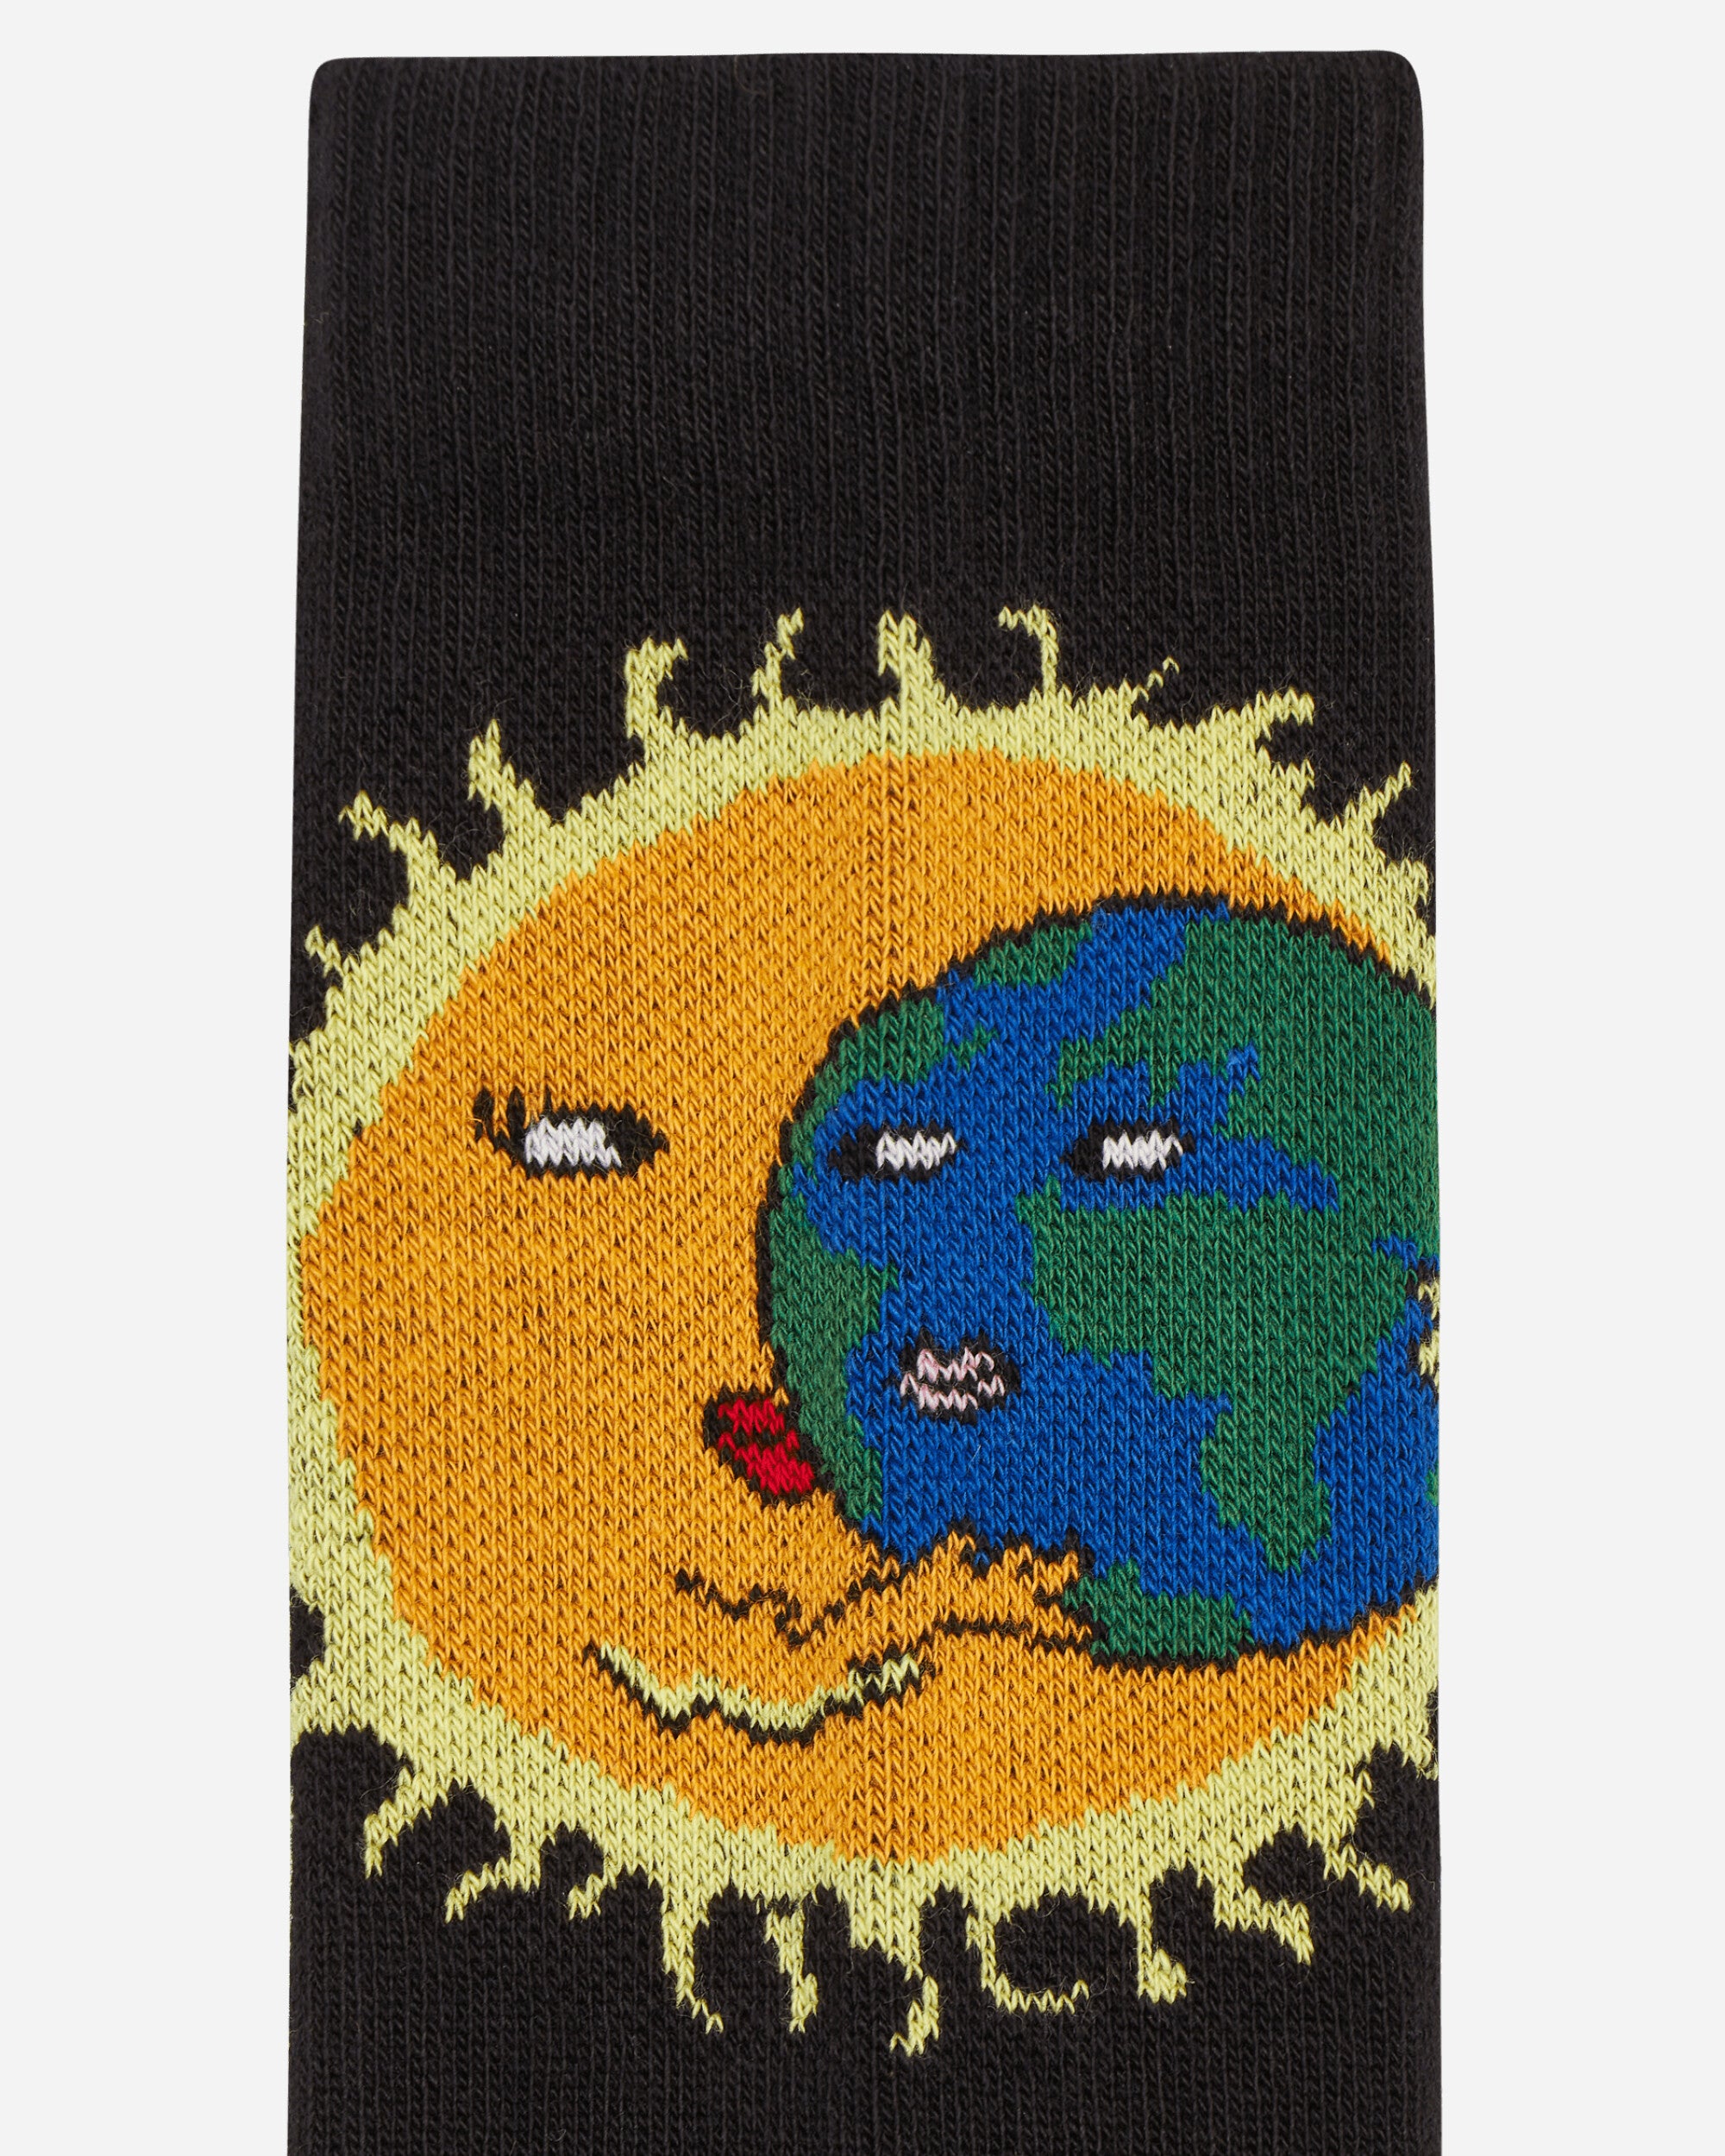 Sky High Farm Moon Earth Jacquard Socks Knit Black Underwear Socks SHF04K001  1